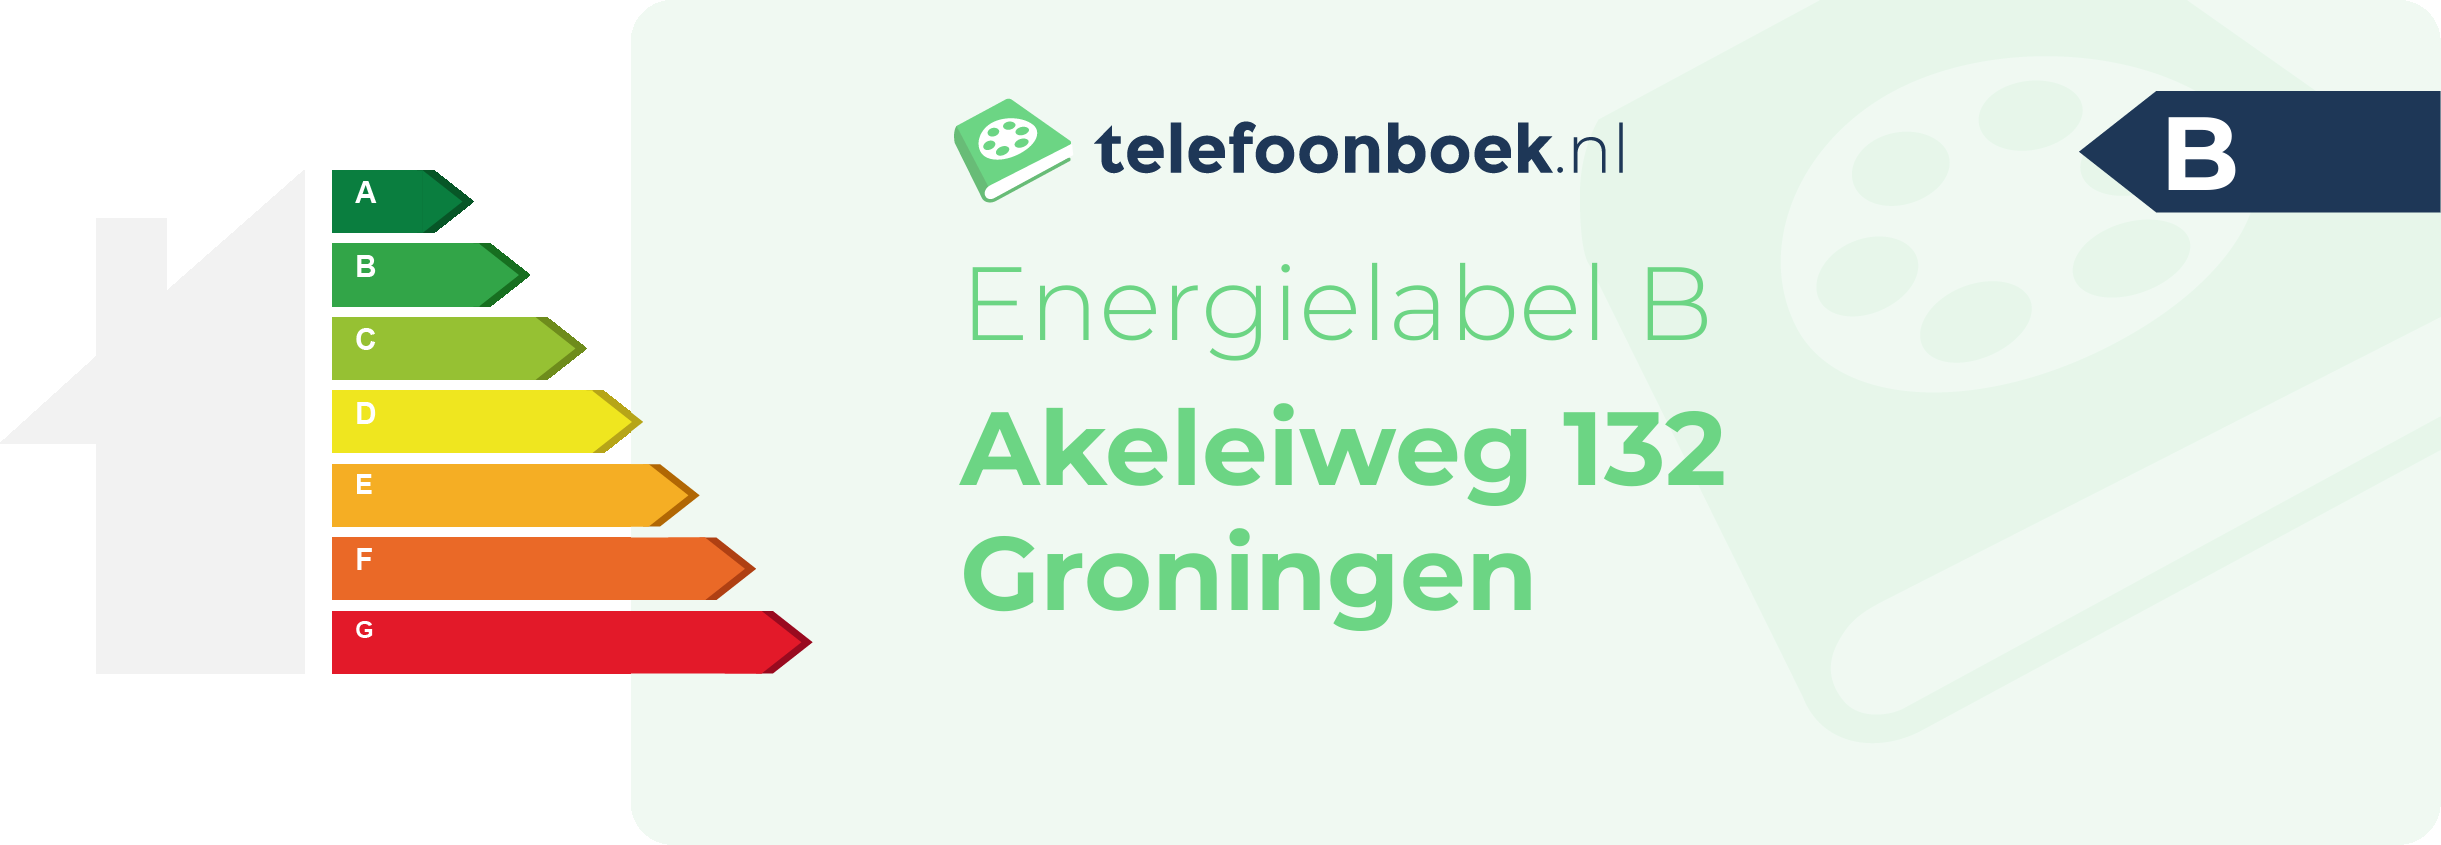 Energielabel Akeleiweg 132 Groningen